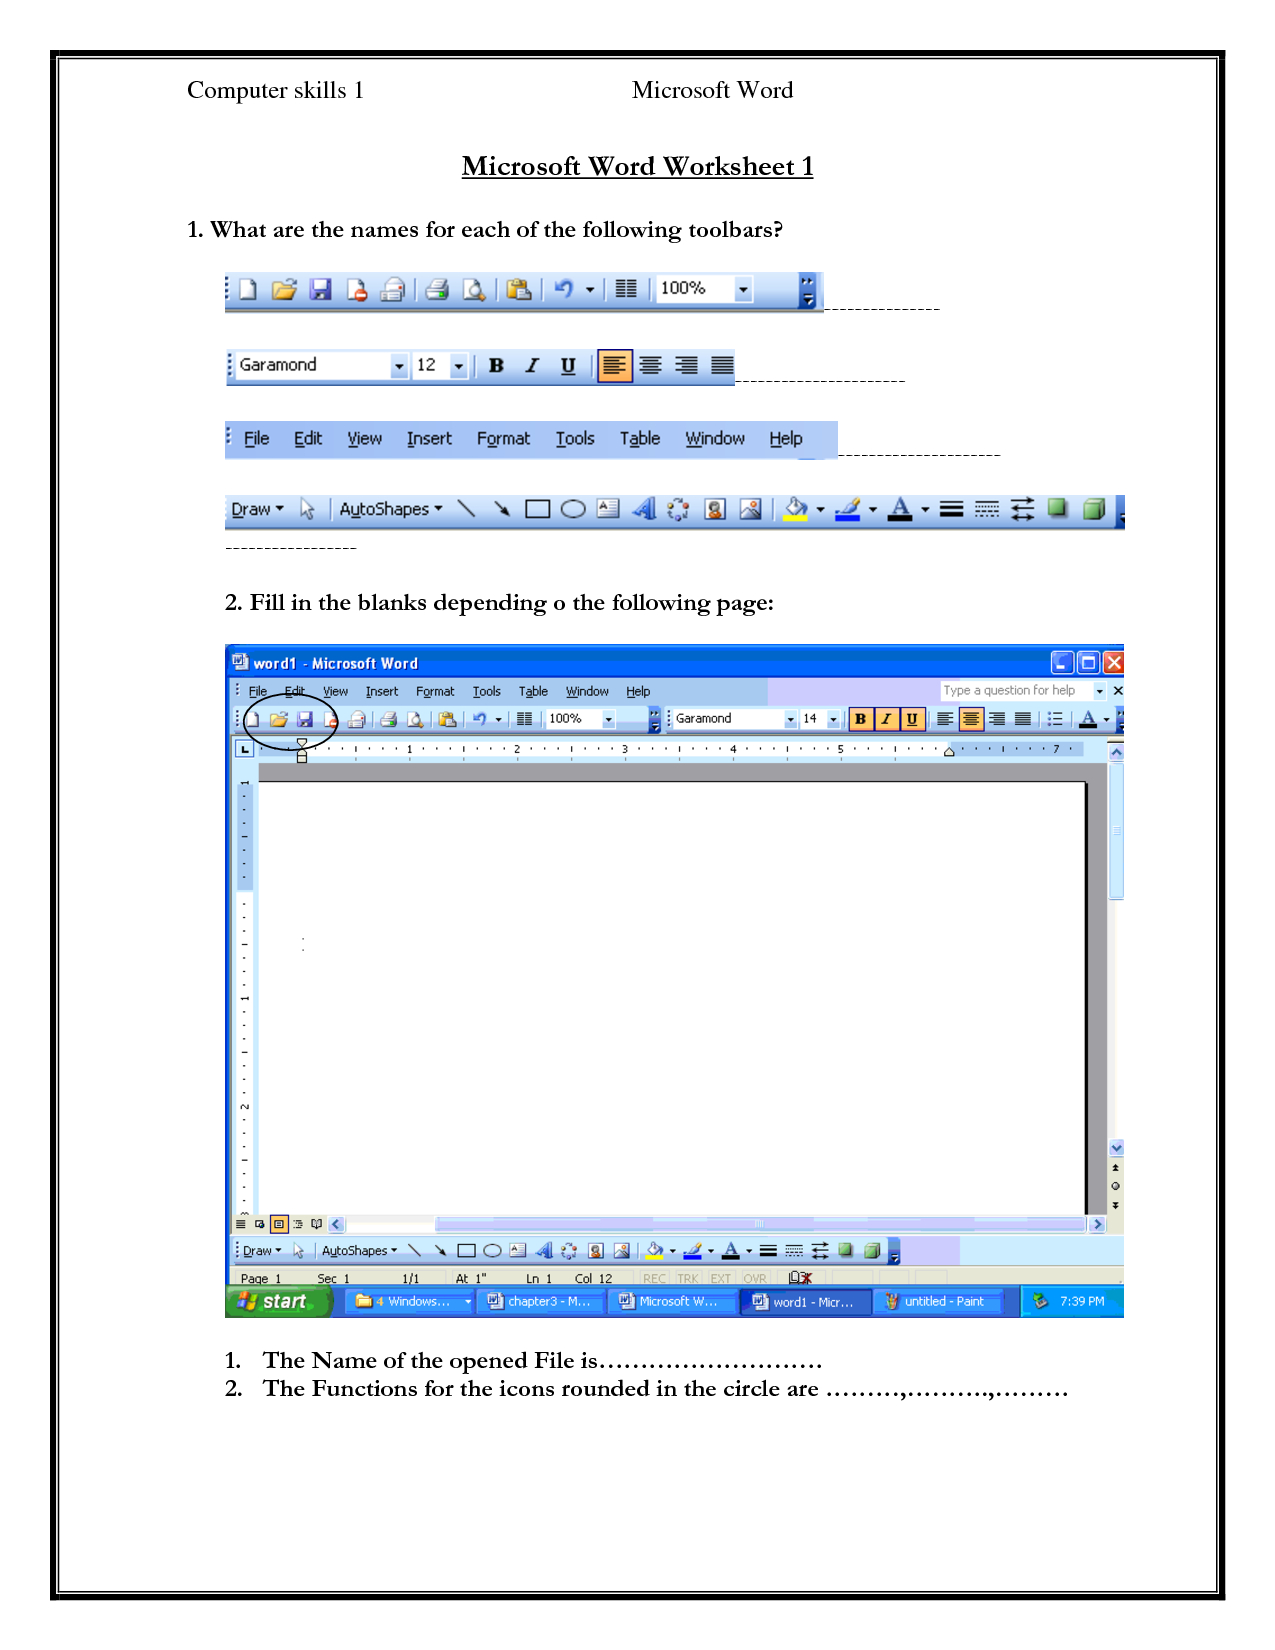 Computer Skills Worksheets | Computer Skills 1 Microsoft Word | Parts Of A Computer Worksheet Printable